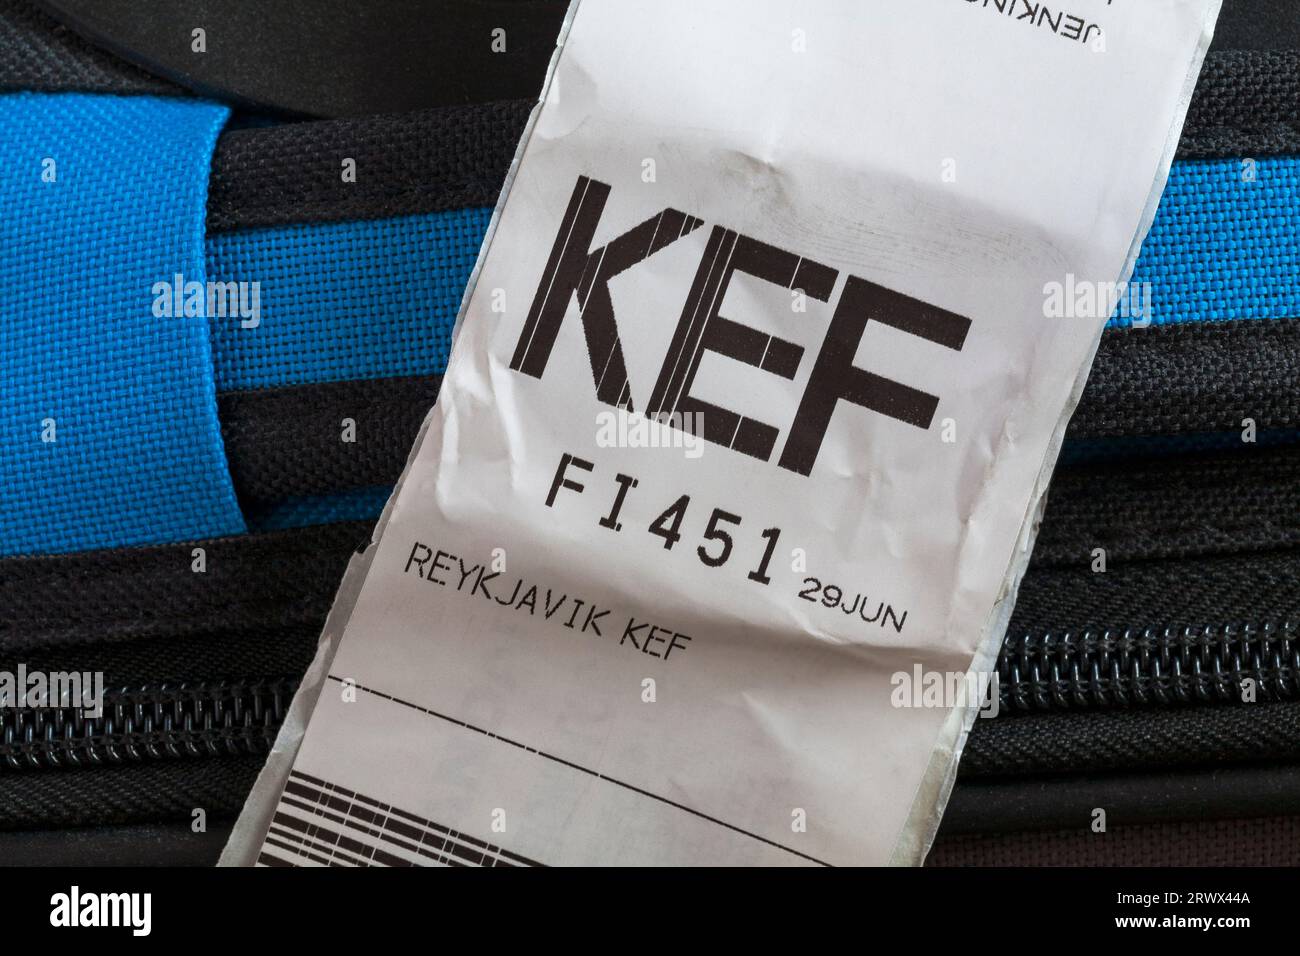 IcelandAir luggage label stuck on case for KEF Reykjavik, Iceland Stock Photo